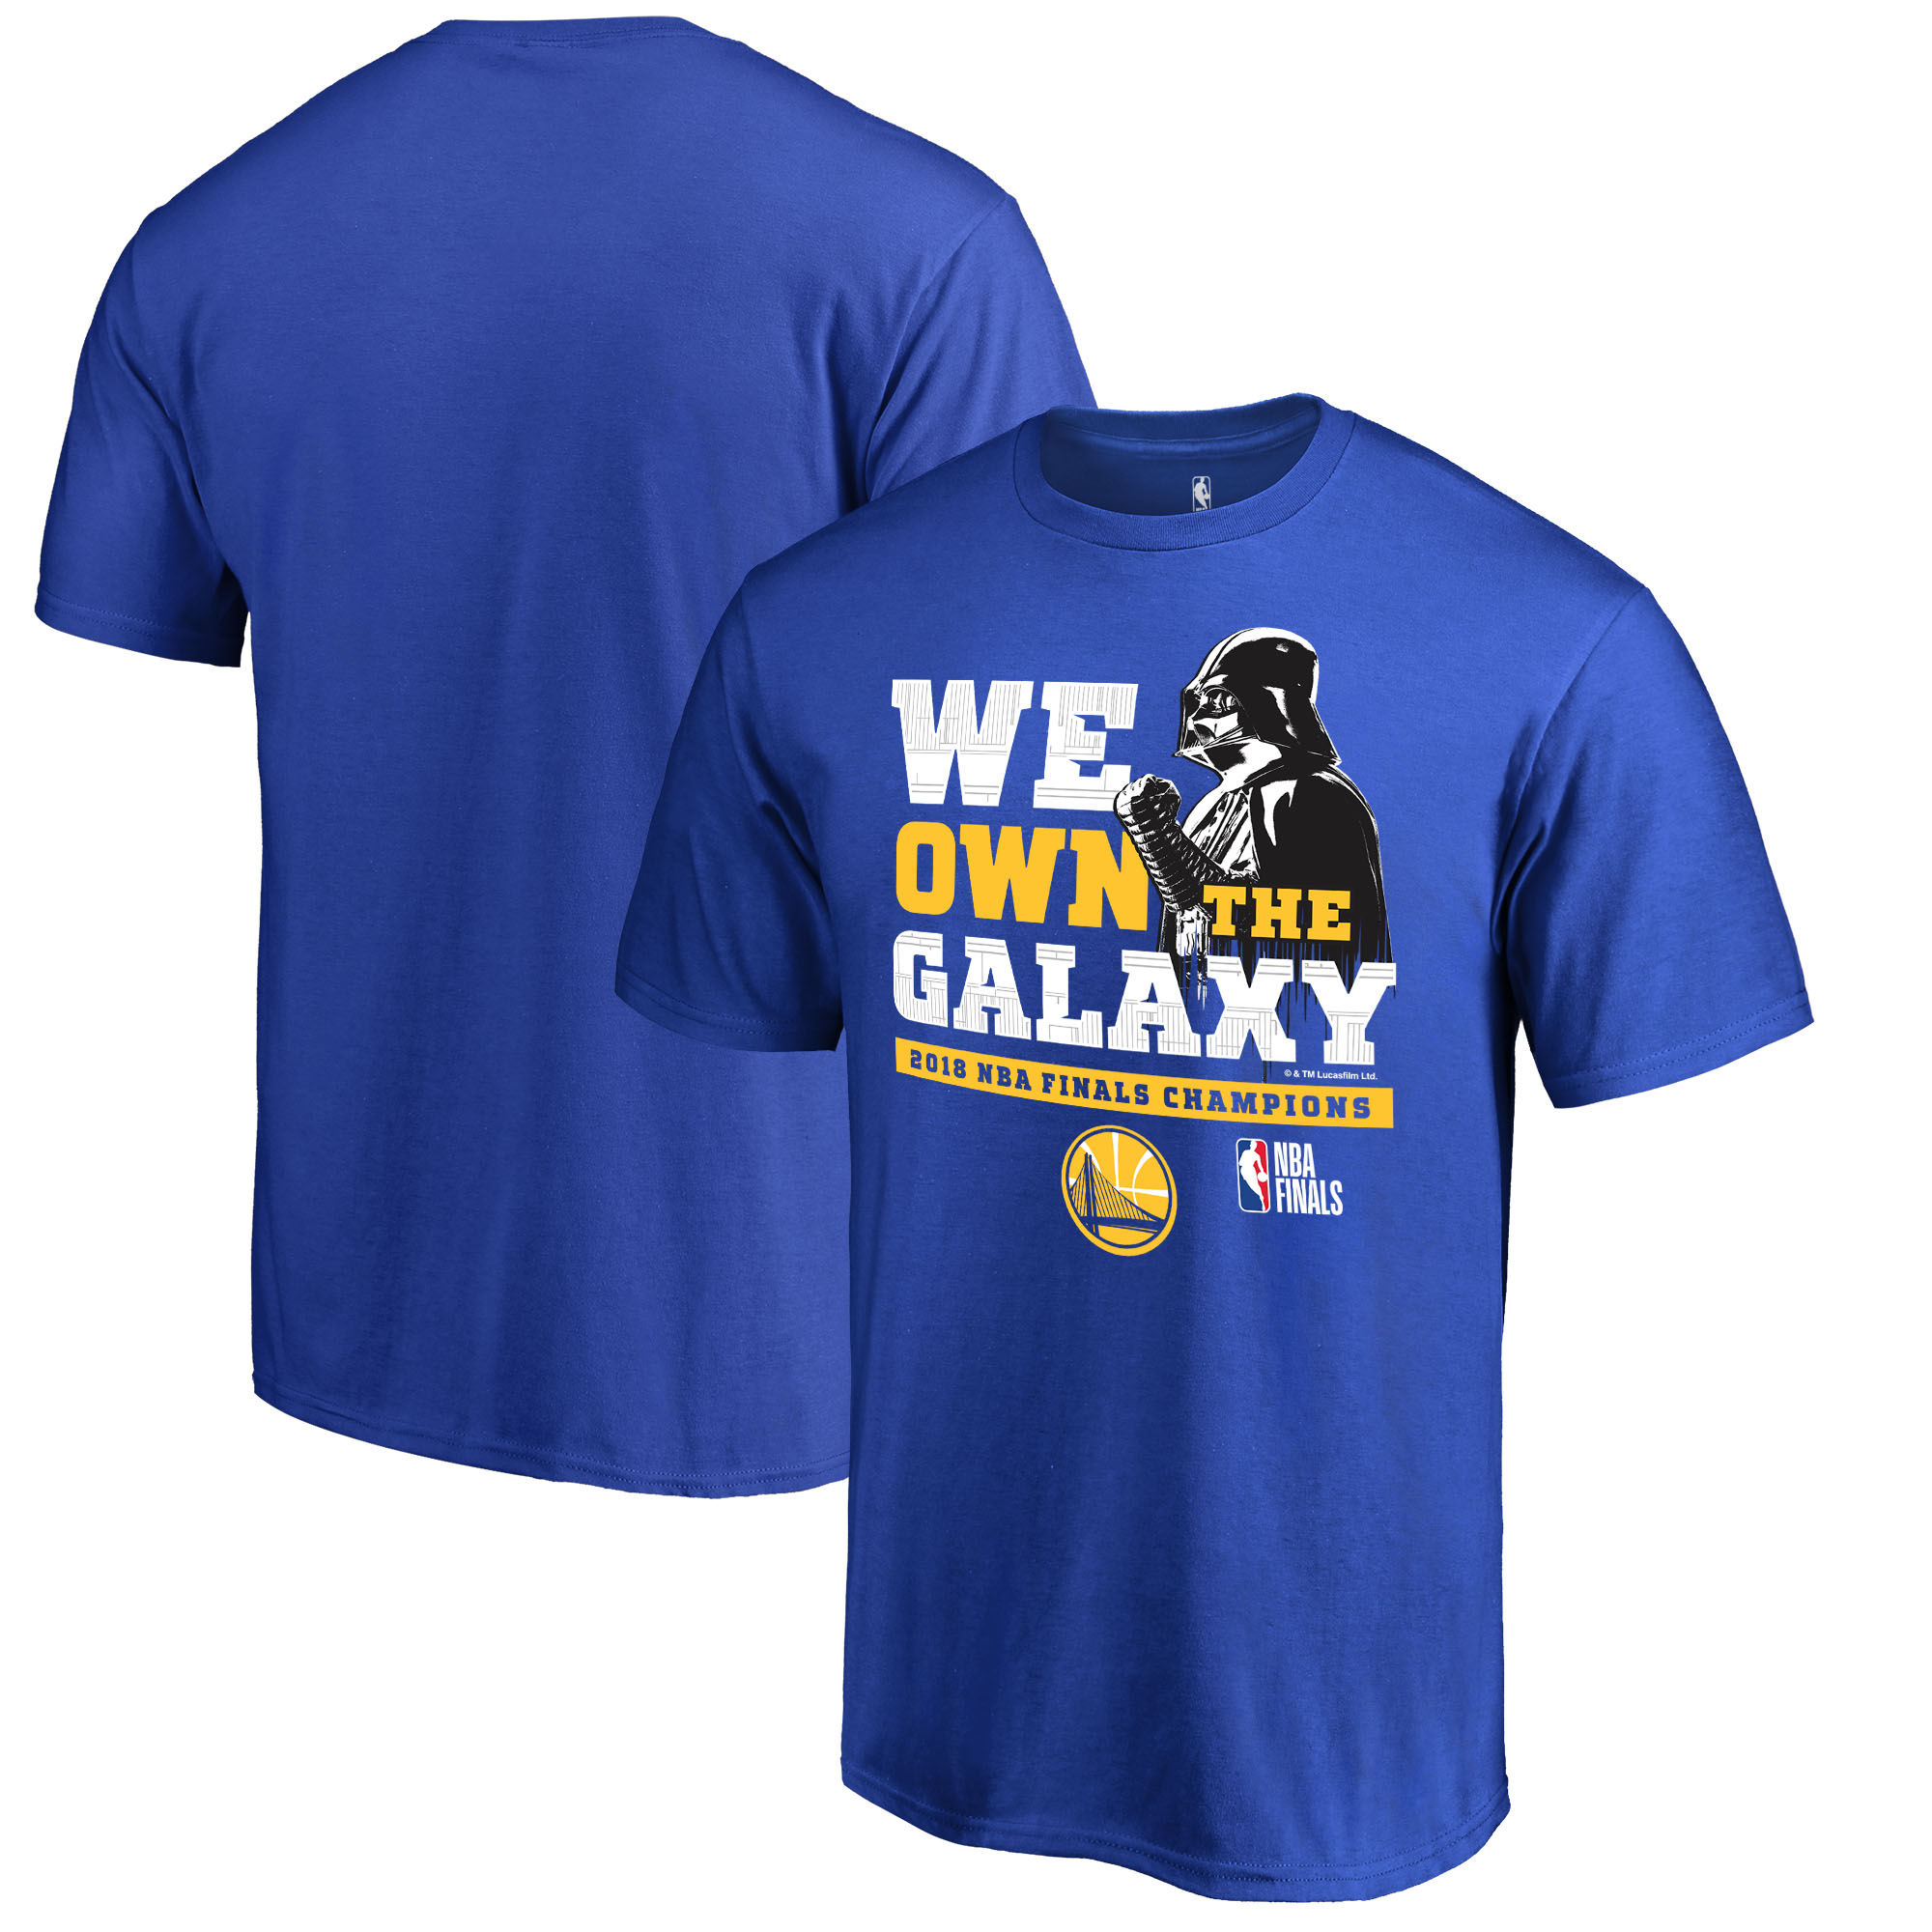 Golden State Warriors Fanatics Branded 2018 NBA Finals Champions Star Wars Own the Galaxy T-Shirt Royal